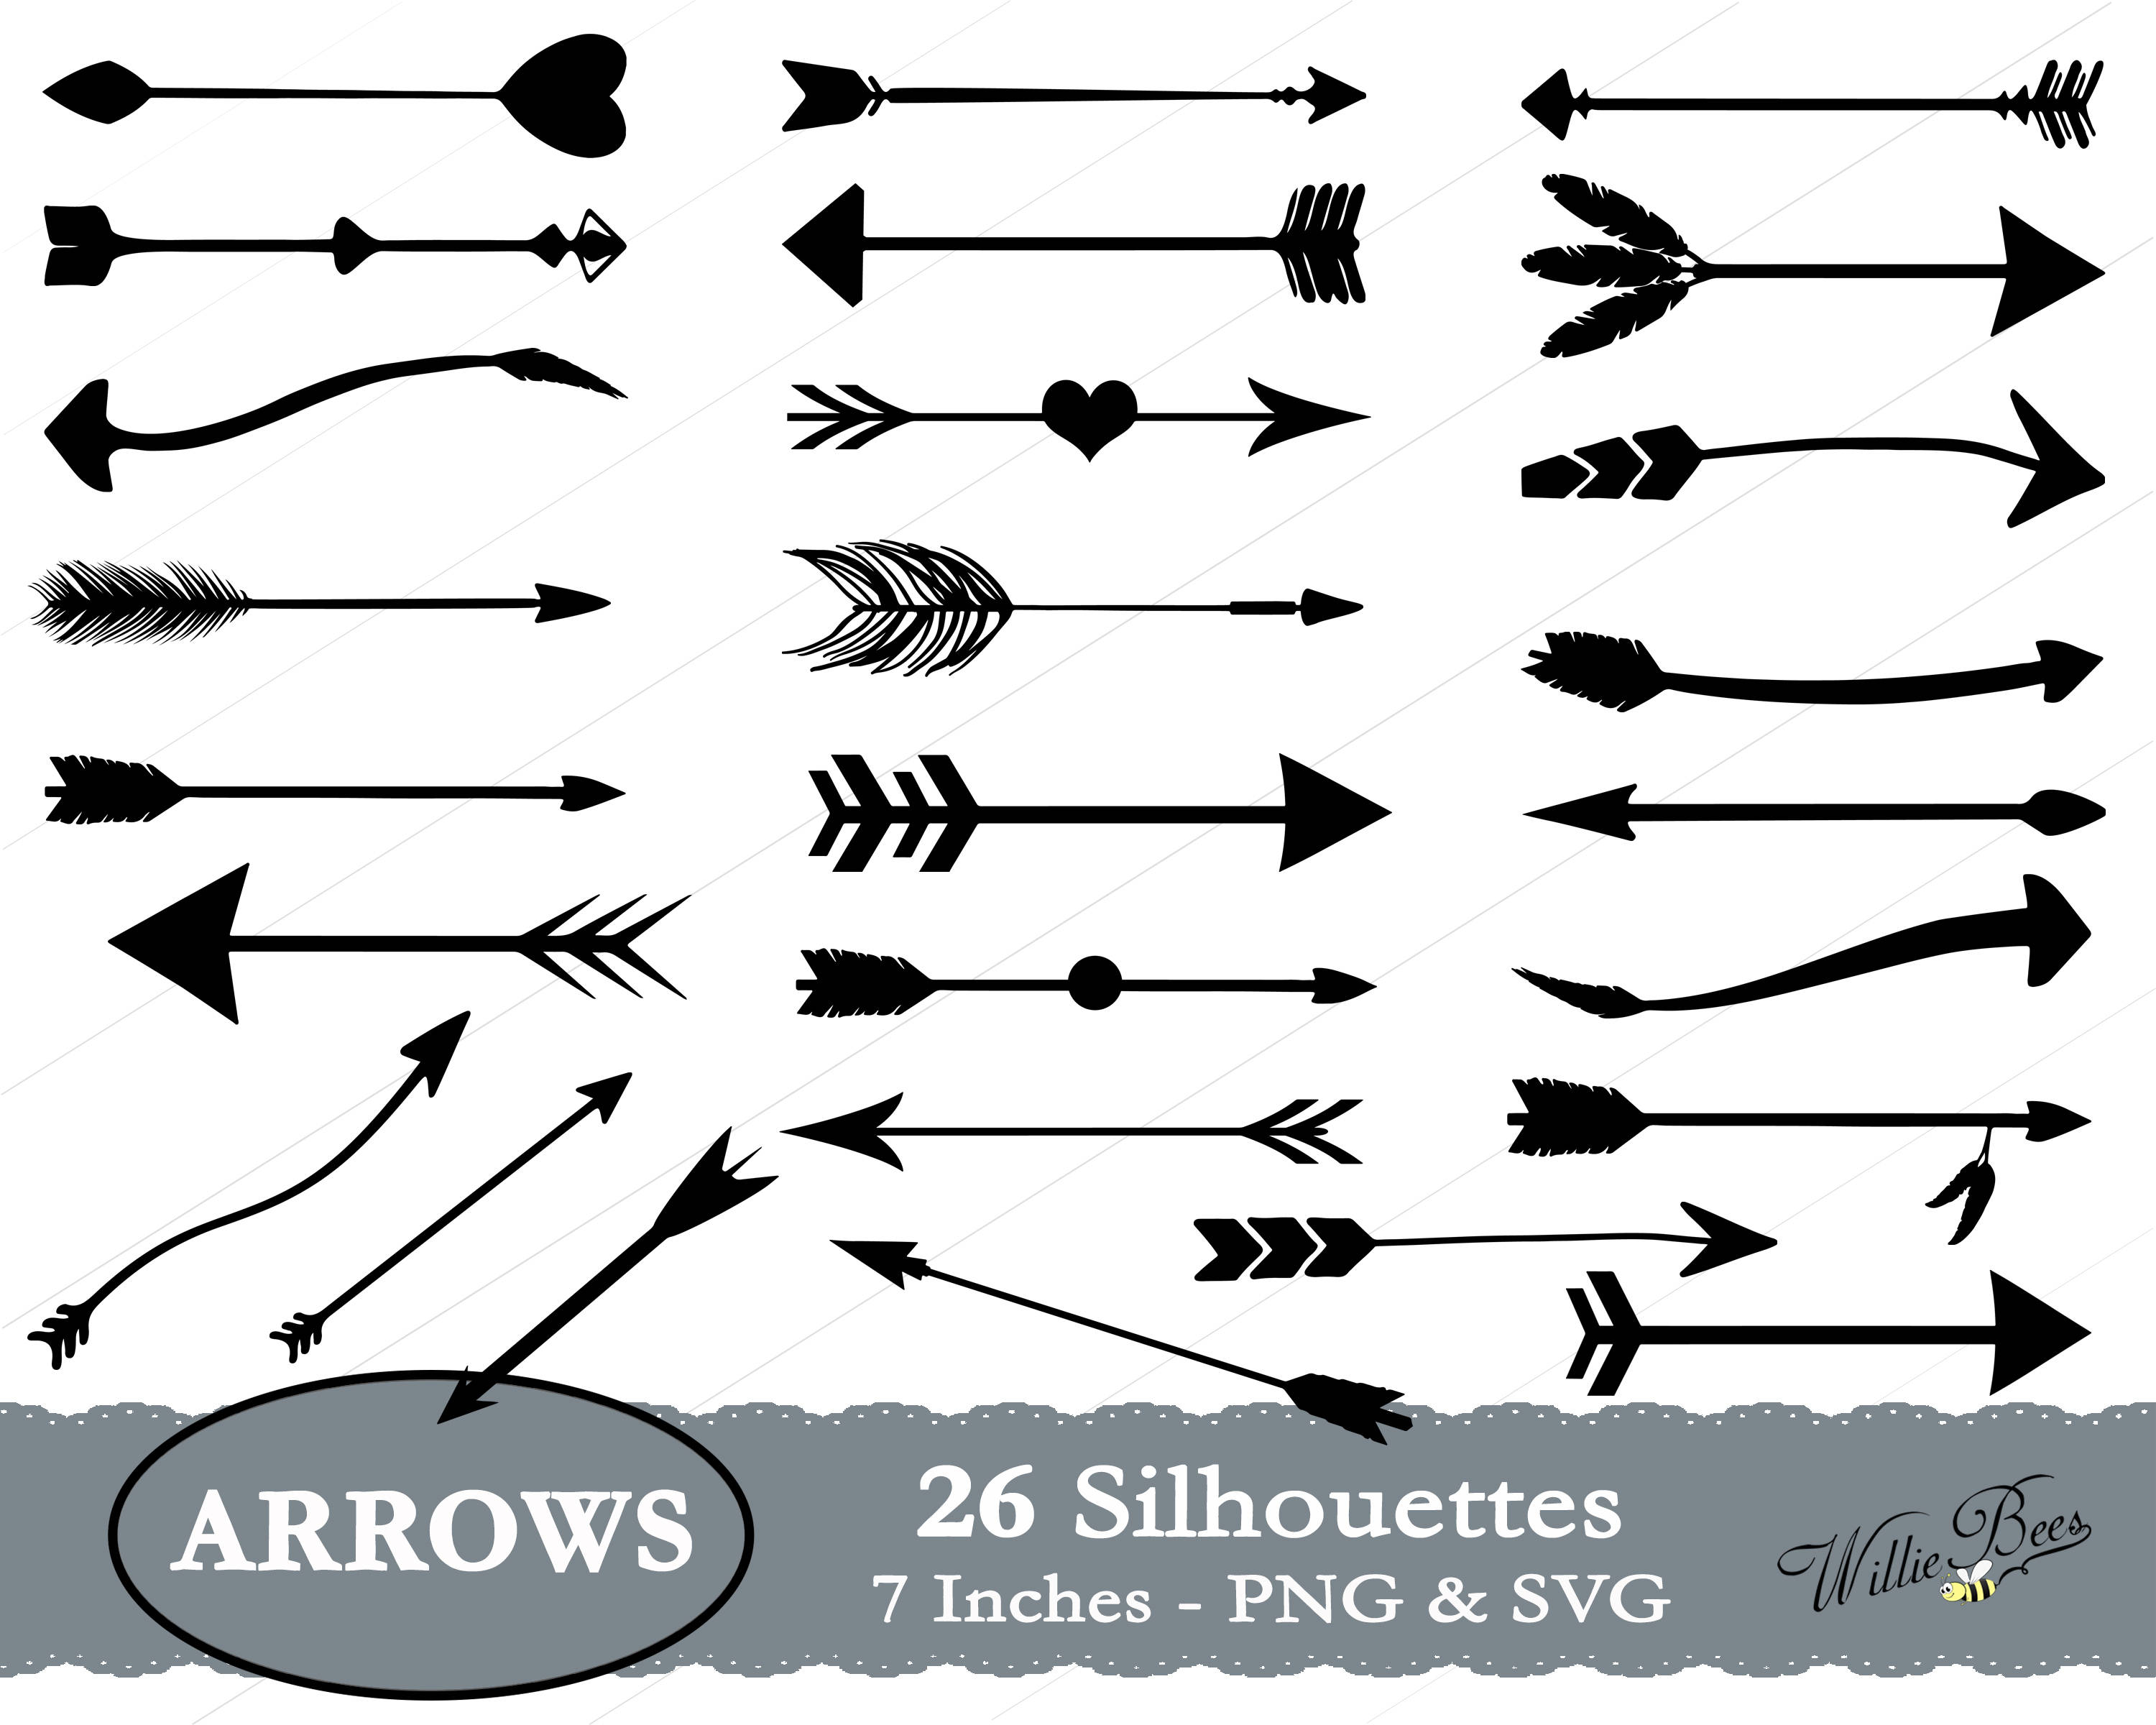 Download Arrow SVG, Arrow Silhouette, Tribal Arrows, Arrow Clipart ...